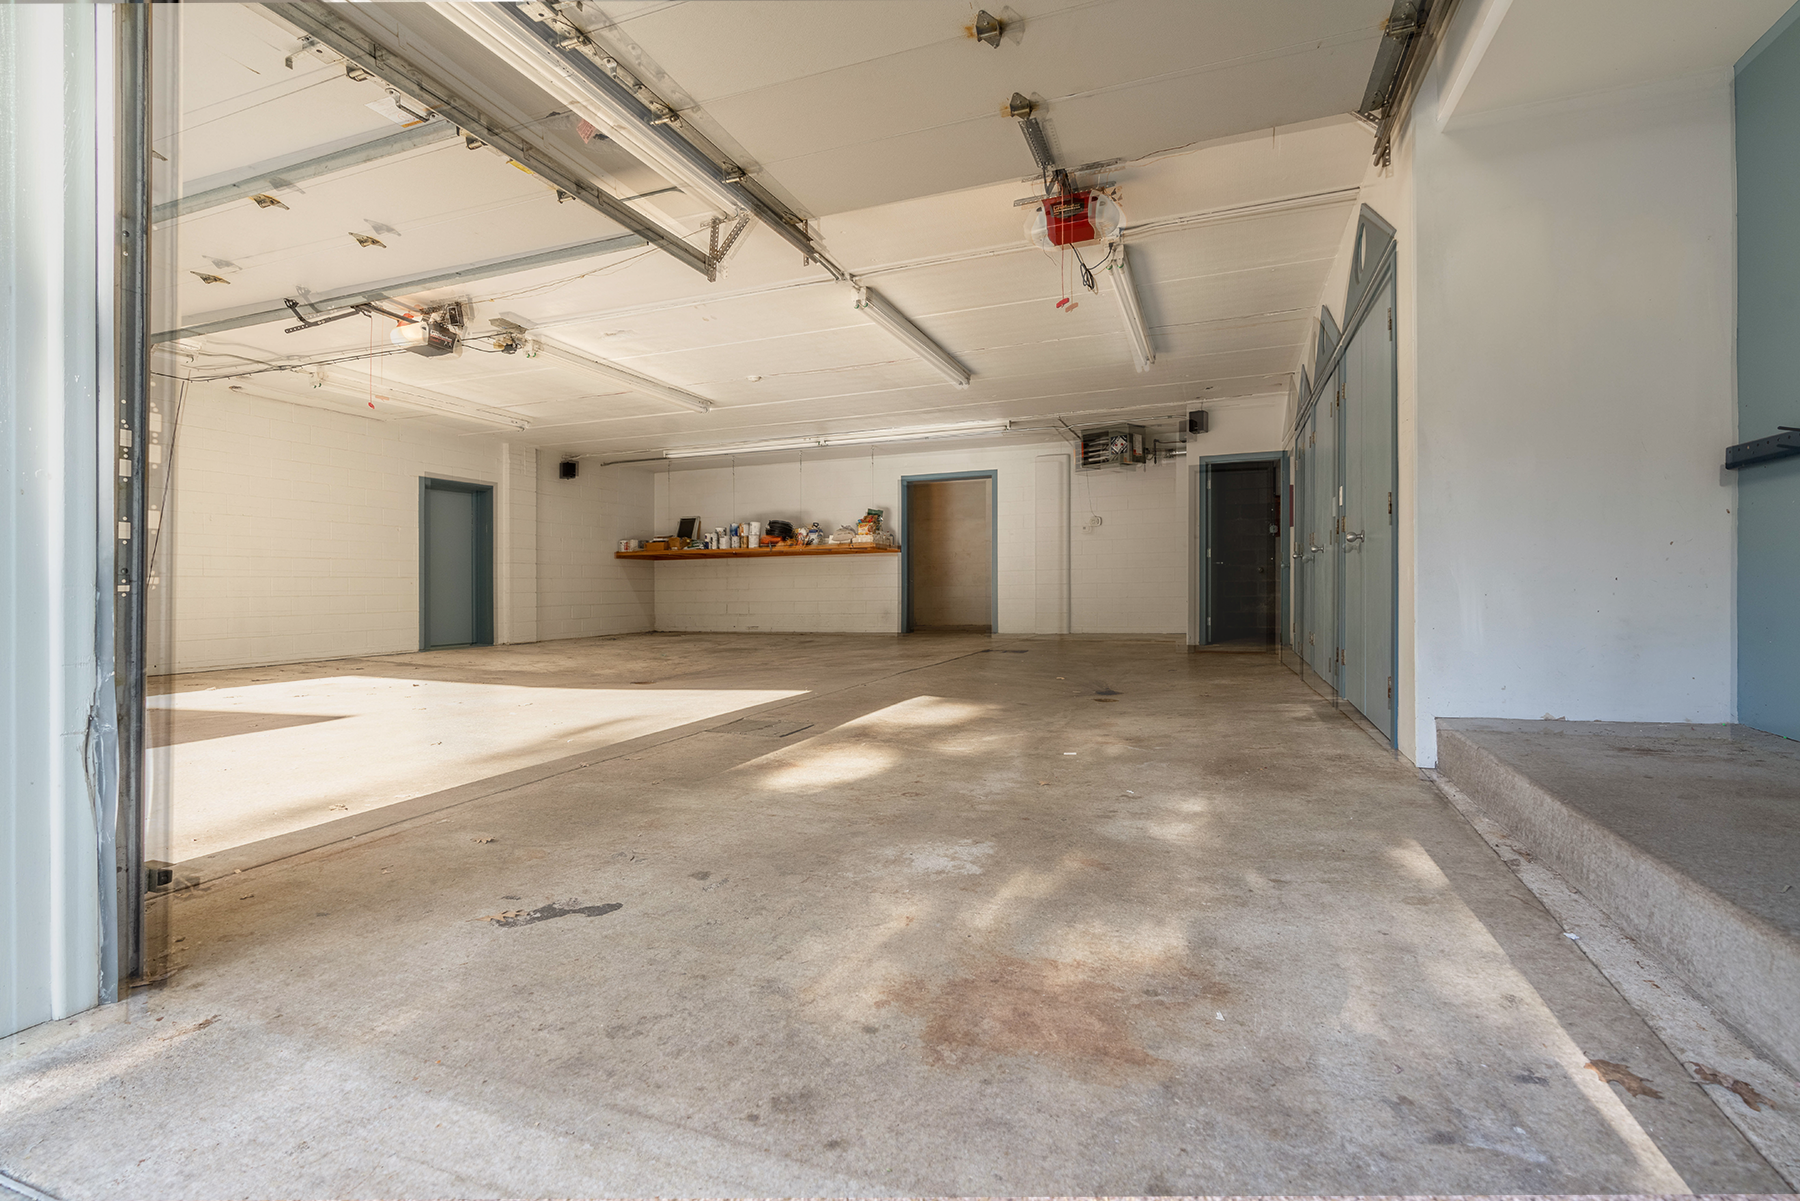 A large empty garage with a garage door open.